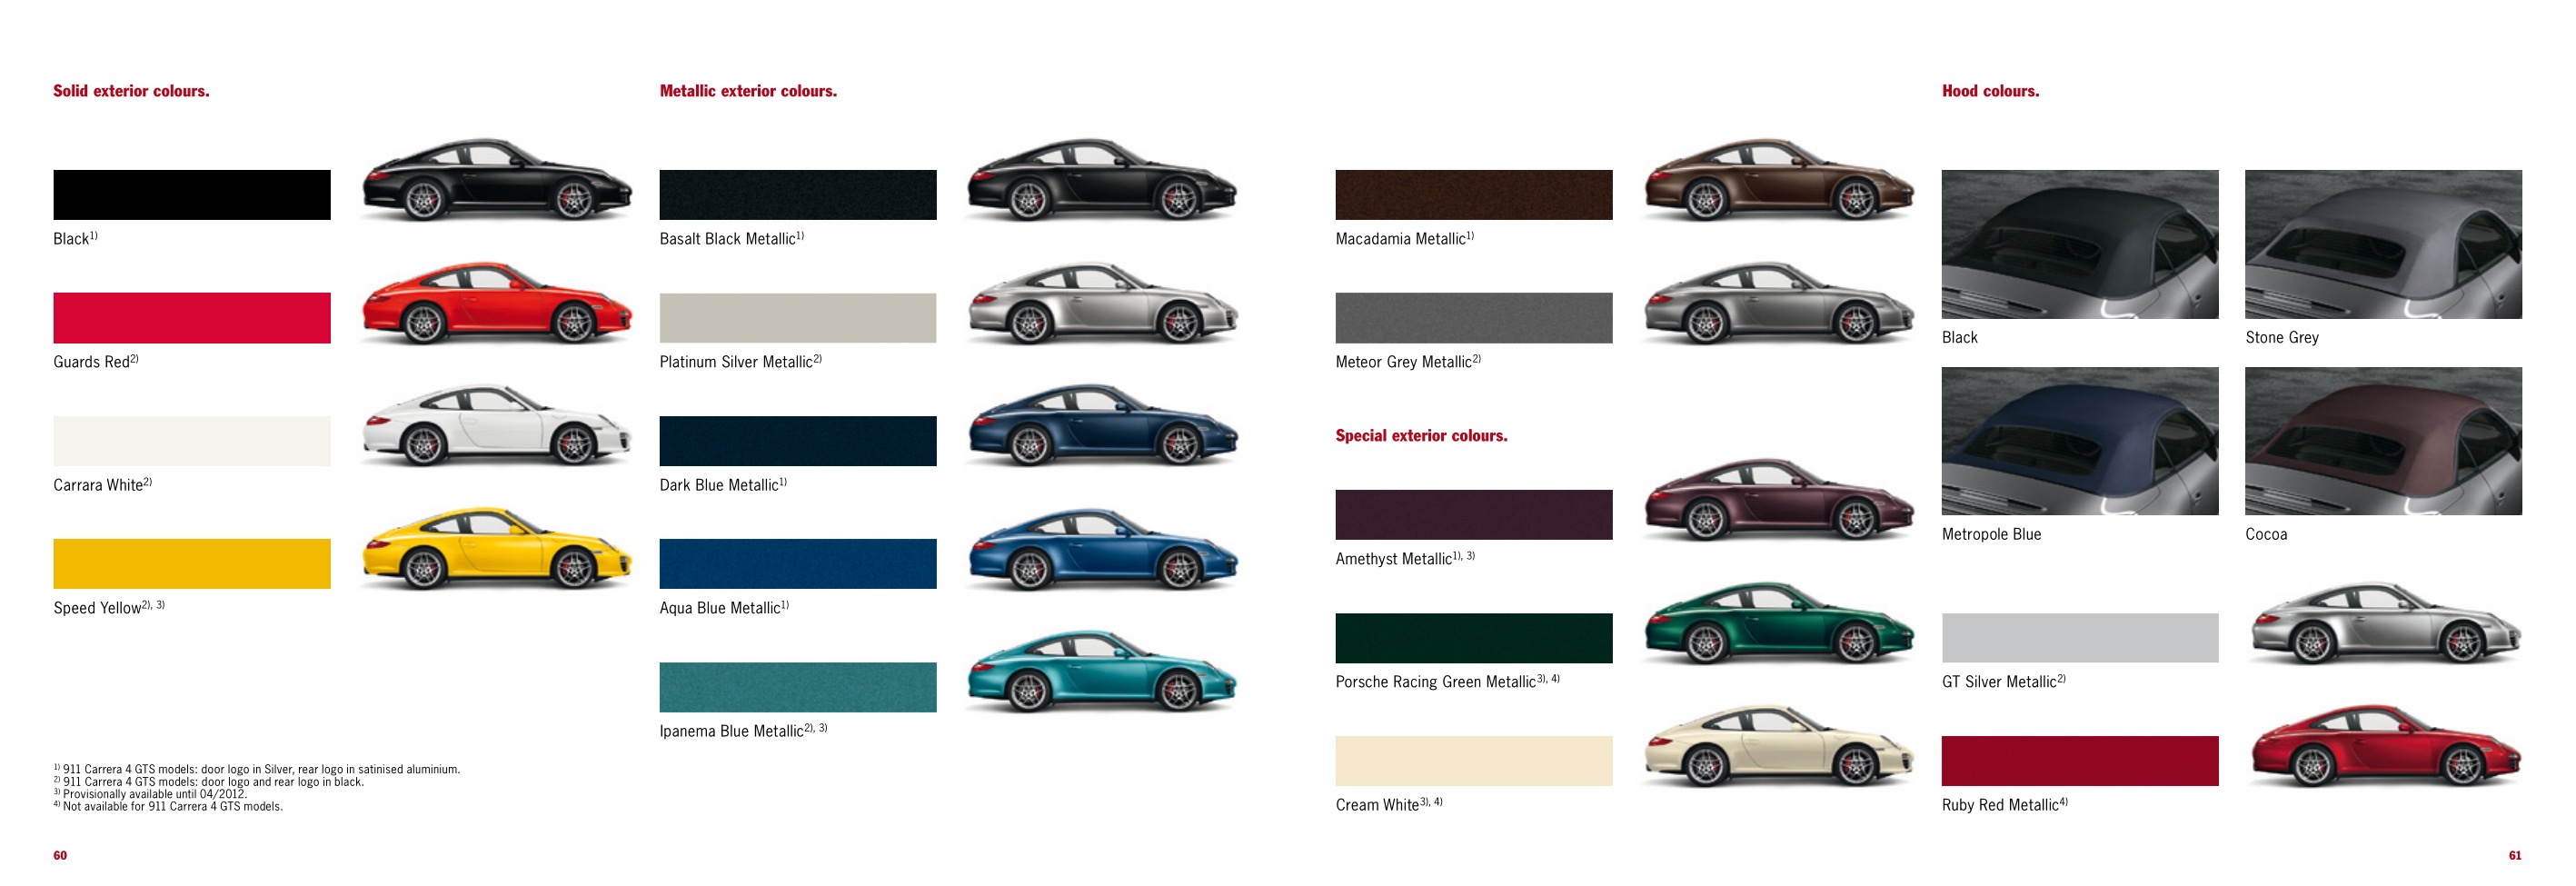 2012 Porsche 911 997 Brochure Page 28